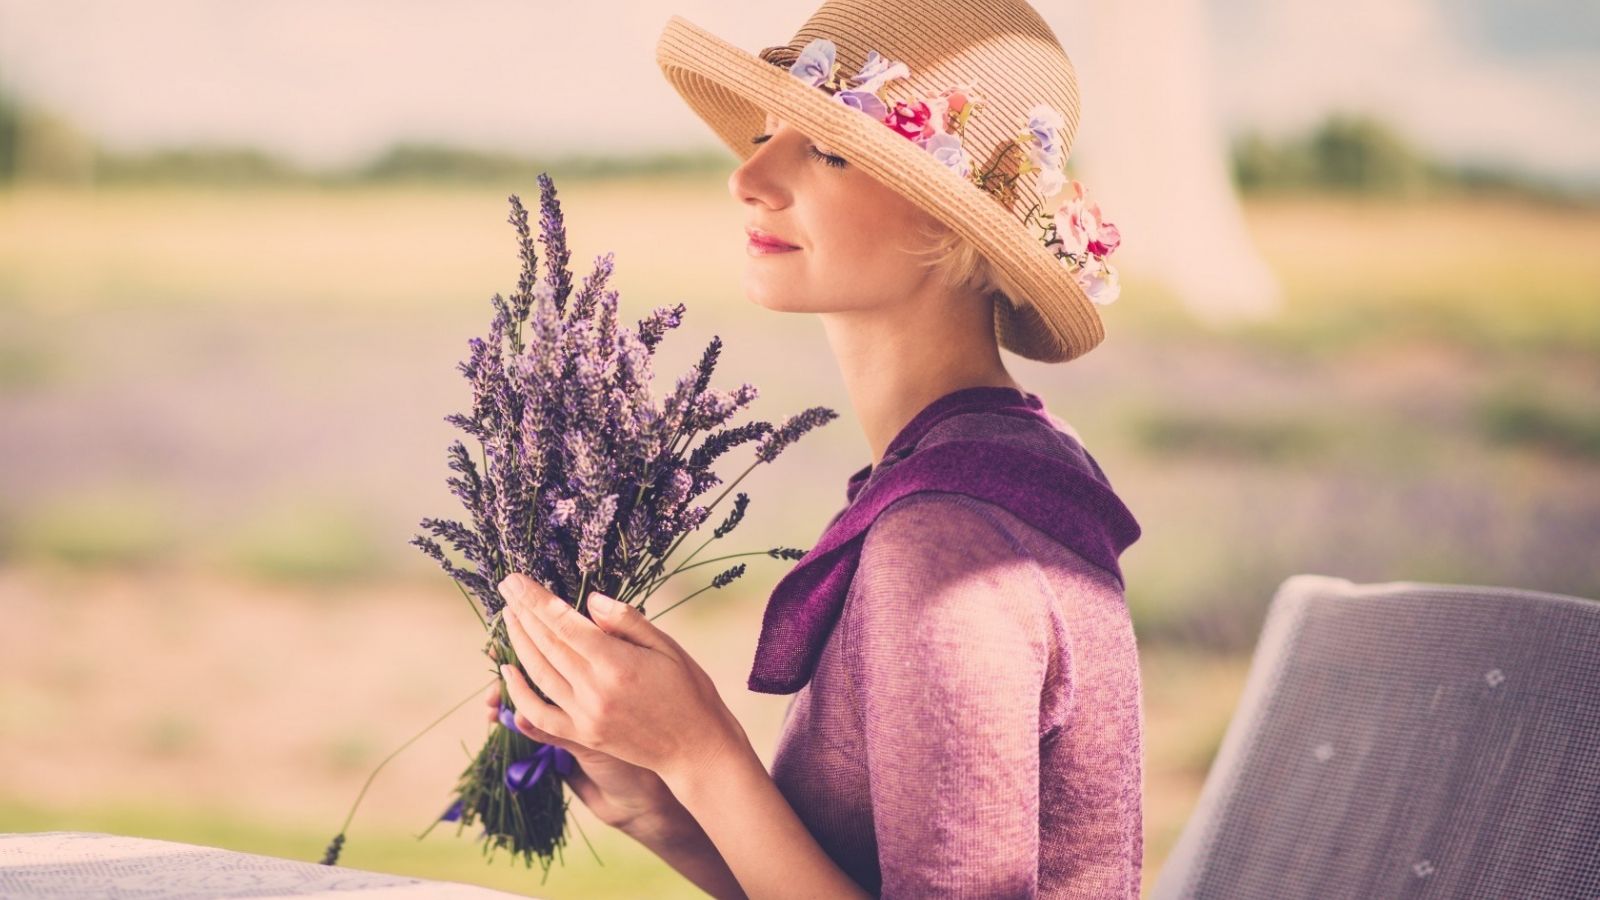 Free download flowers lavender photo vintage lady summer romantic